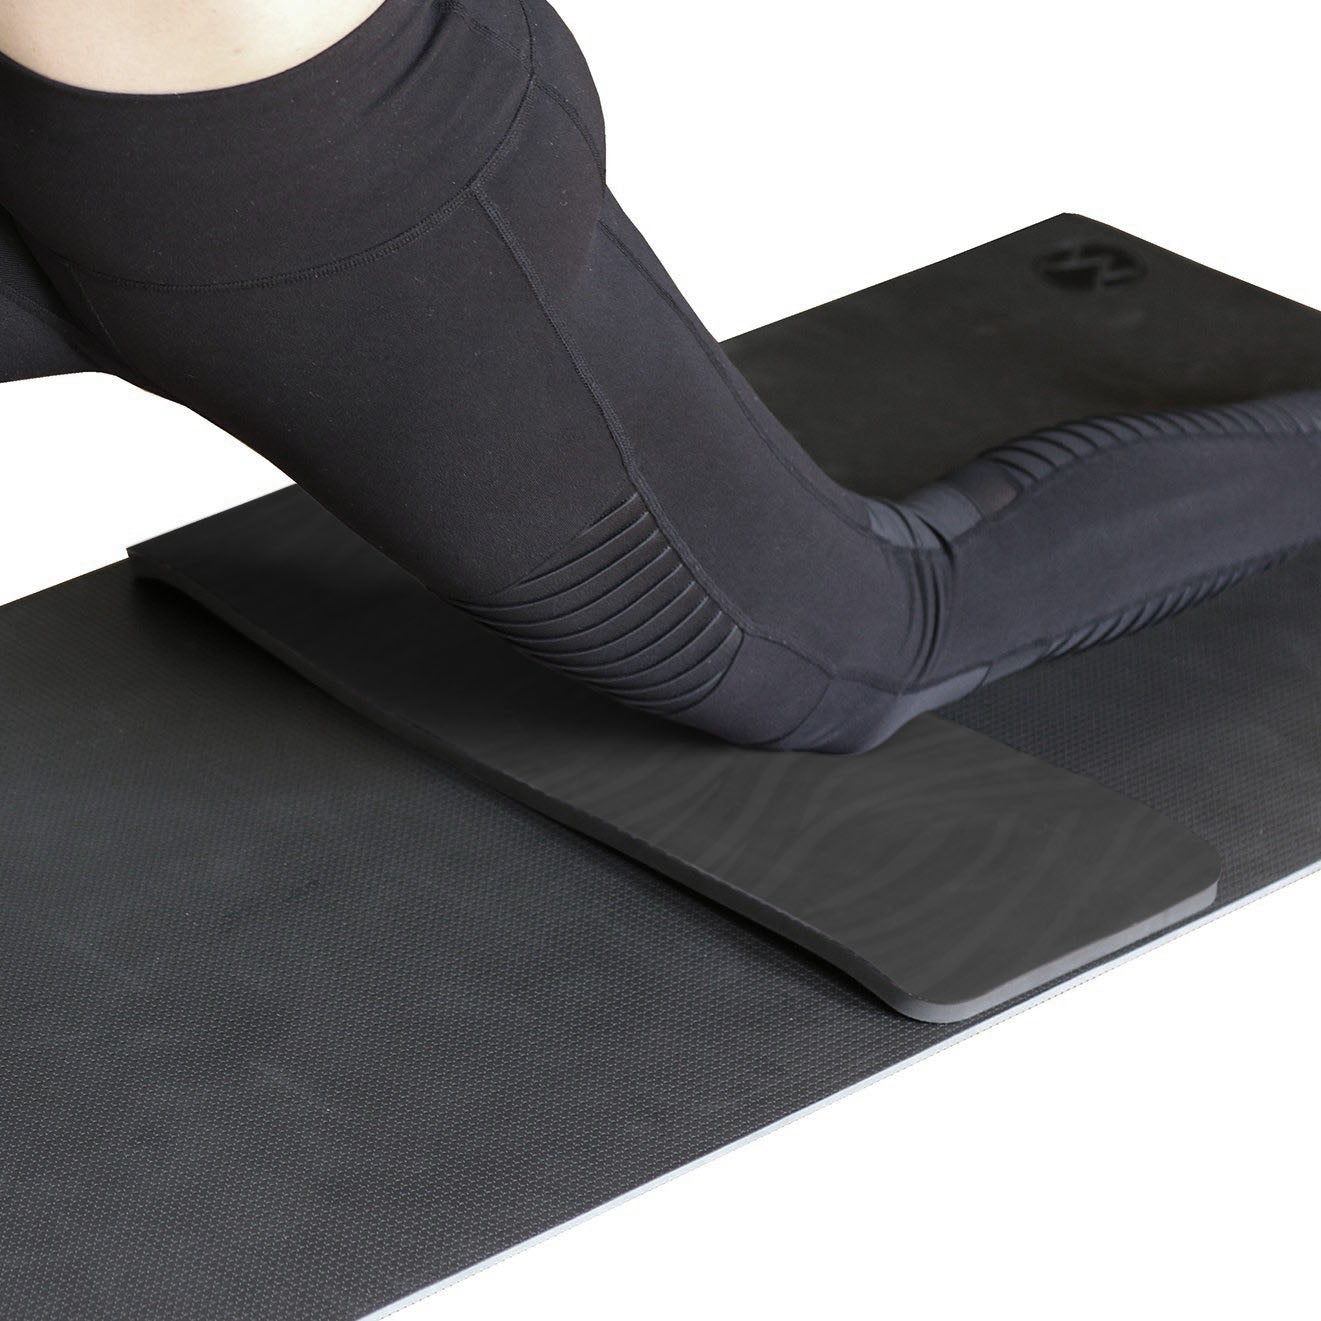 Yoga Knee Pads, Yoga Knee Pads, Yoga Mats For Knees, Hands, Wrists